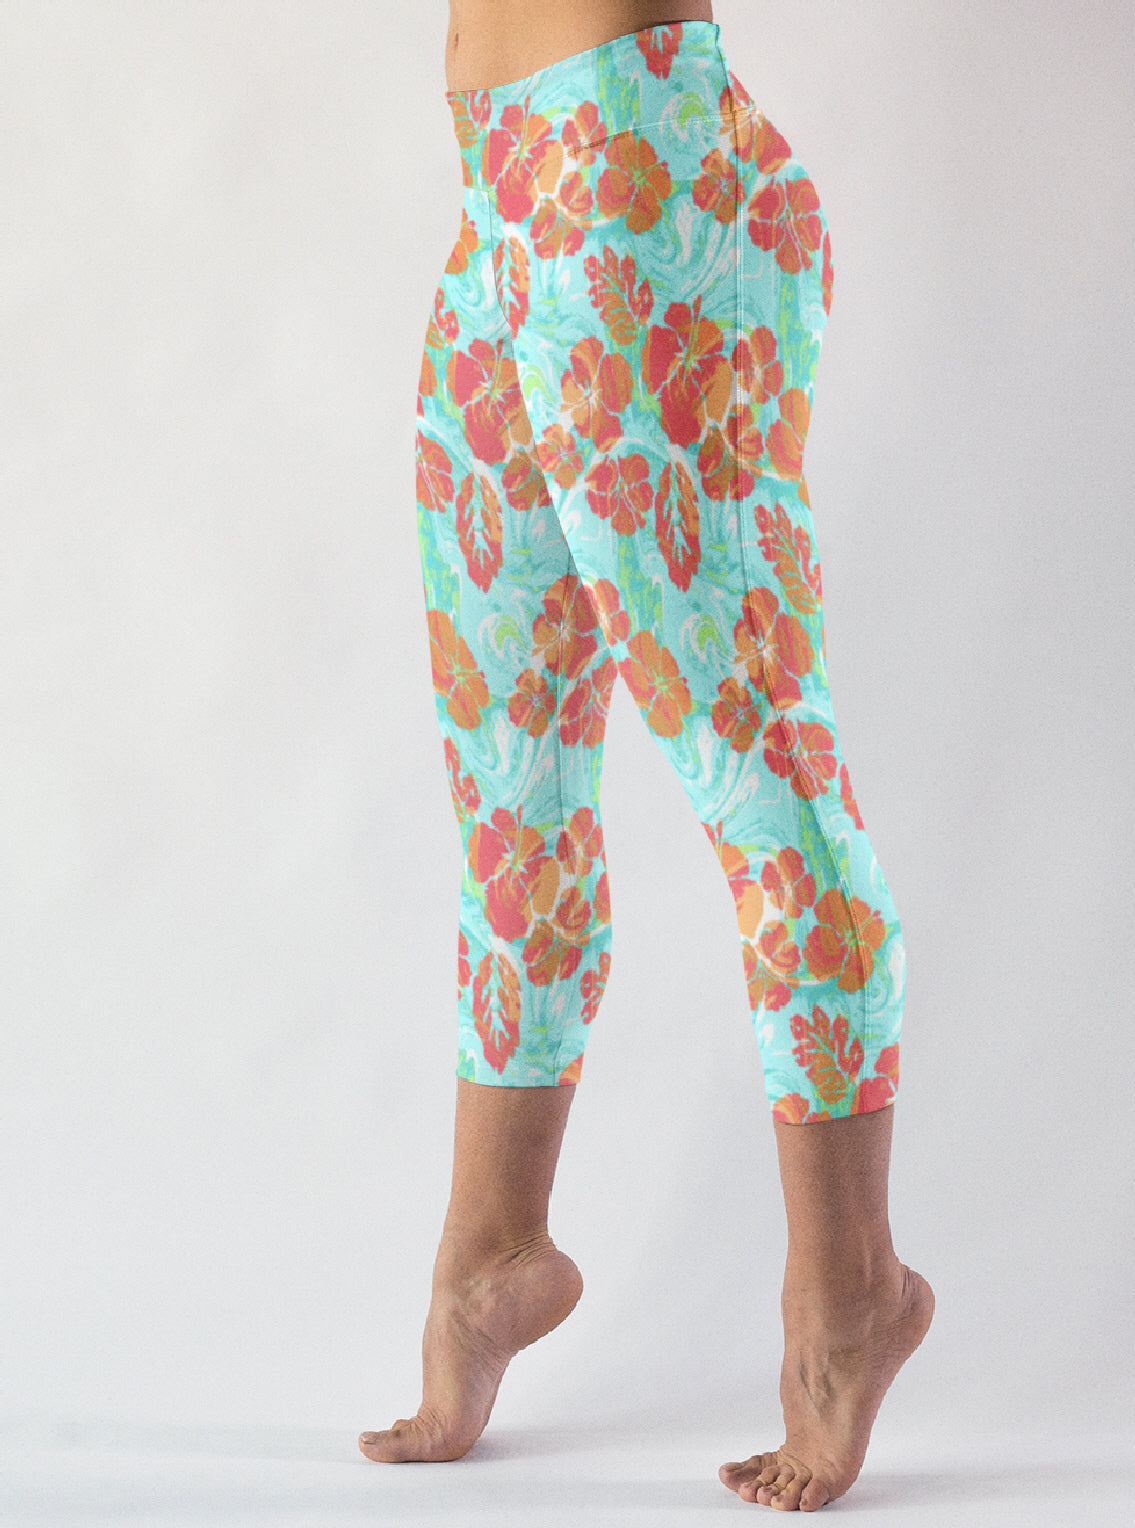 White Tropical Hibiscus Pattern Print Women's Capri Leggings